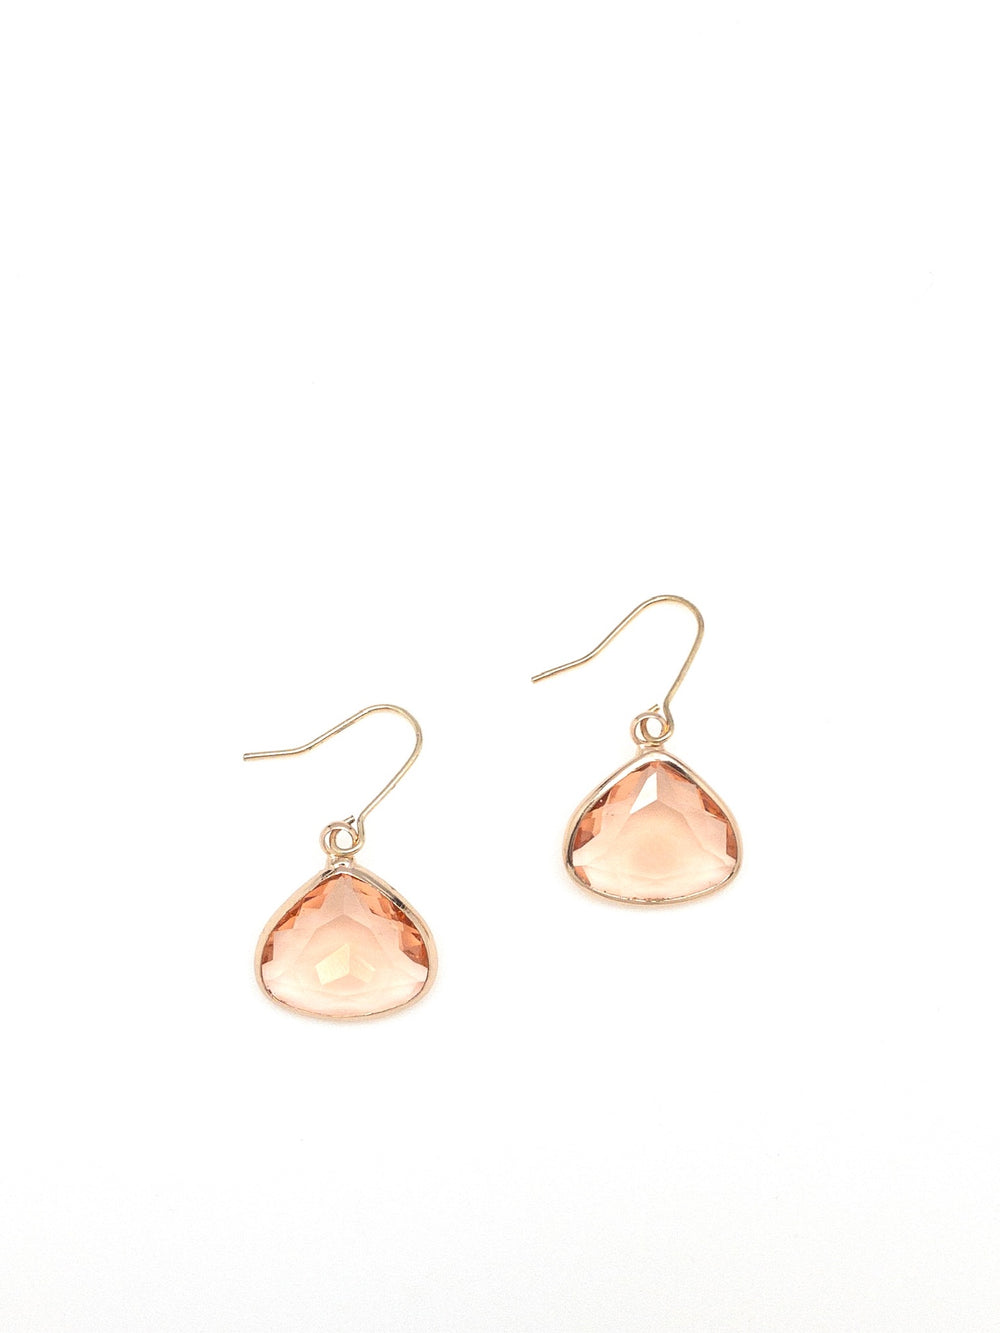 kassie earrings in gold and rose 